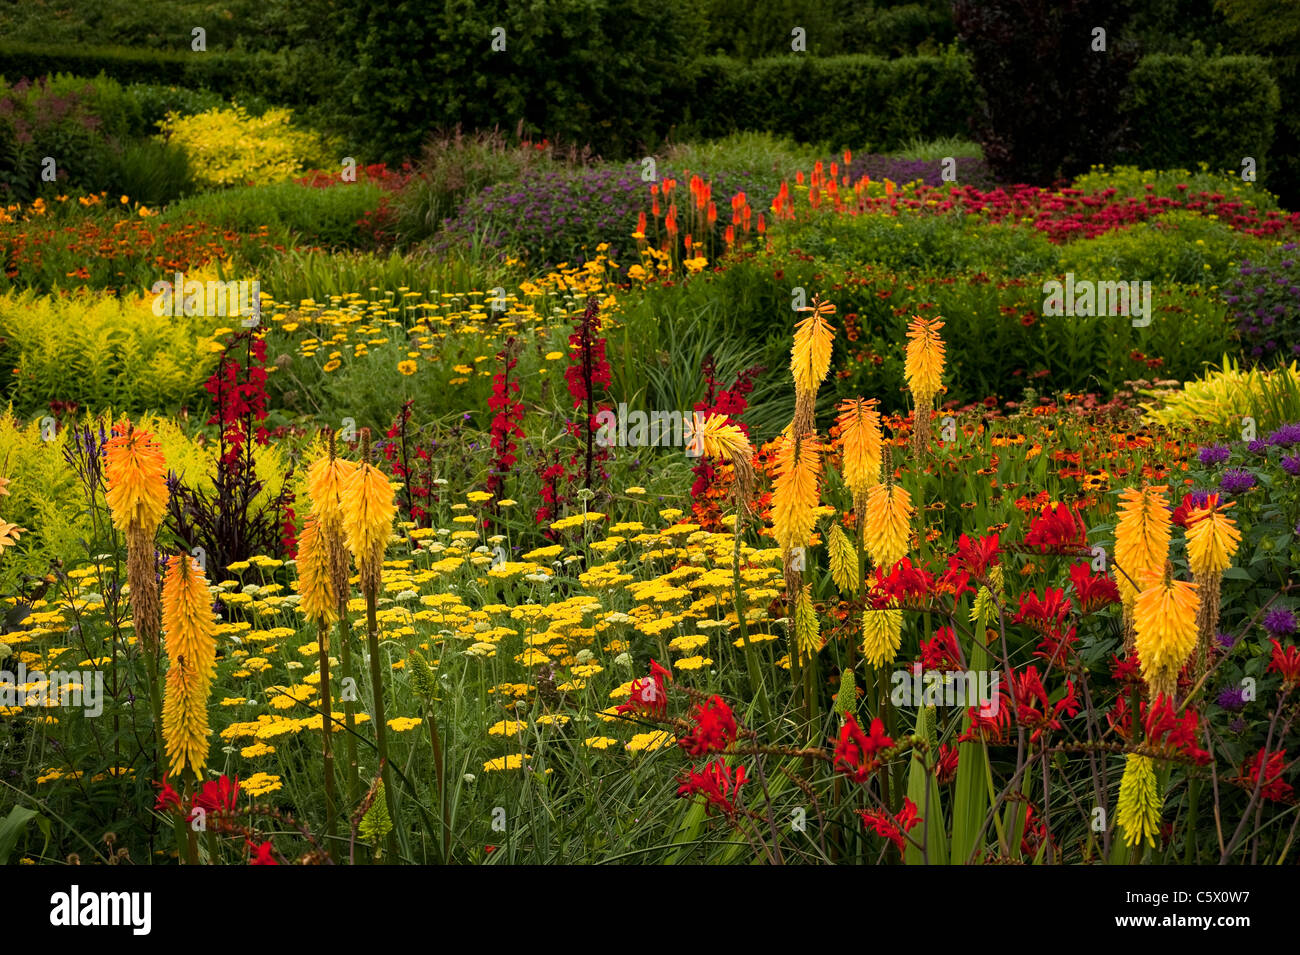 The Hot Garden in Summer, RHS Rosemoor, Devon, England, United Kingdom Stock Photo